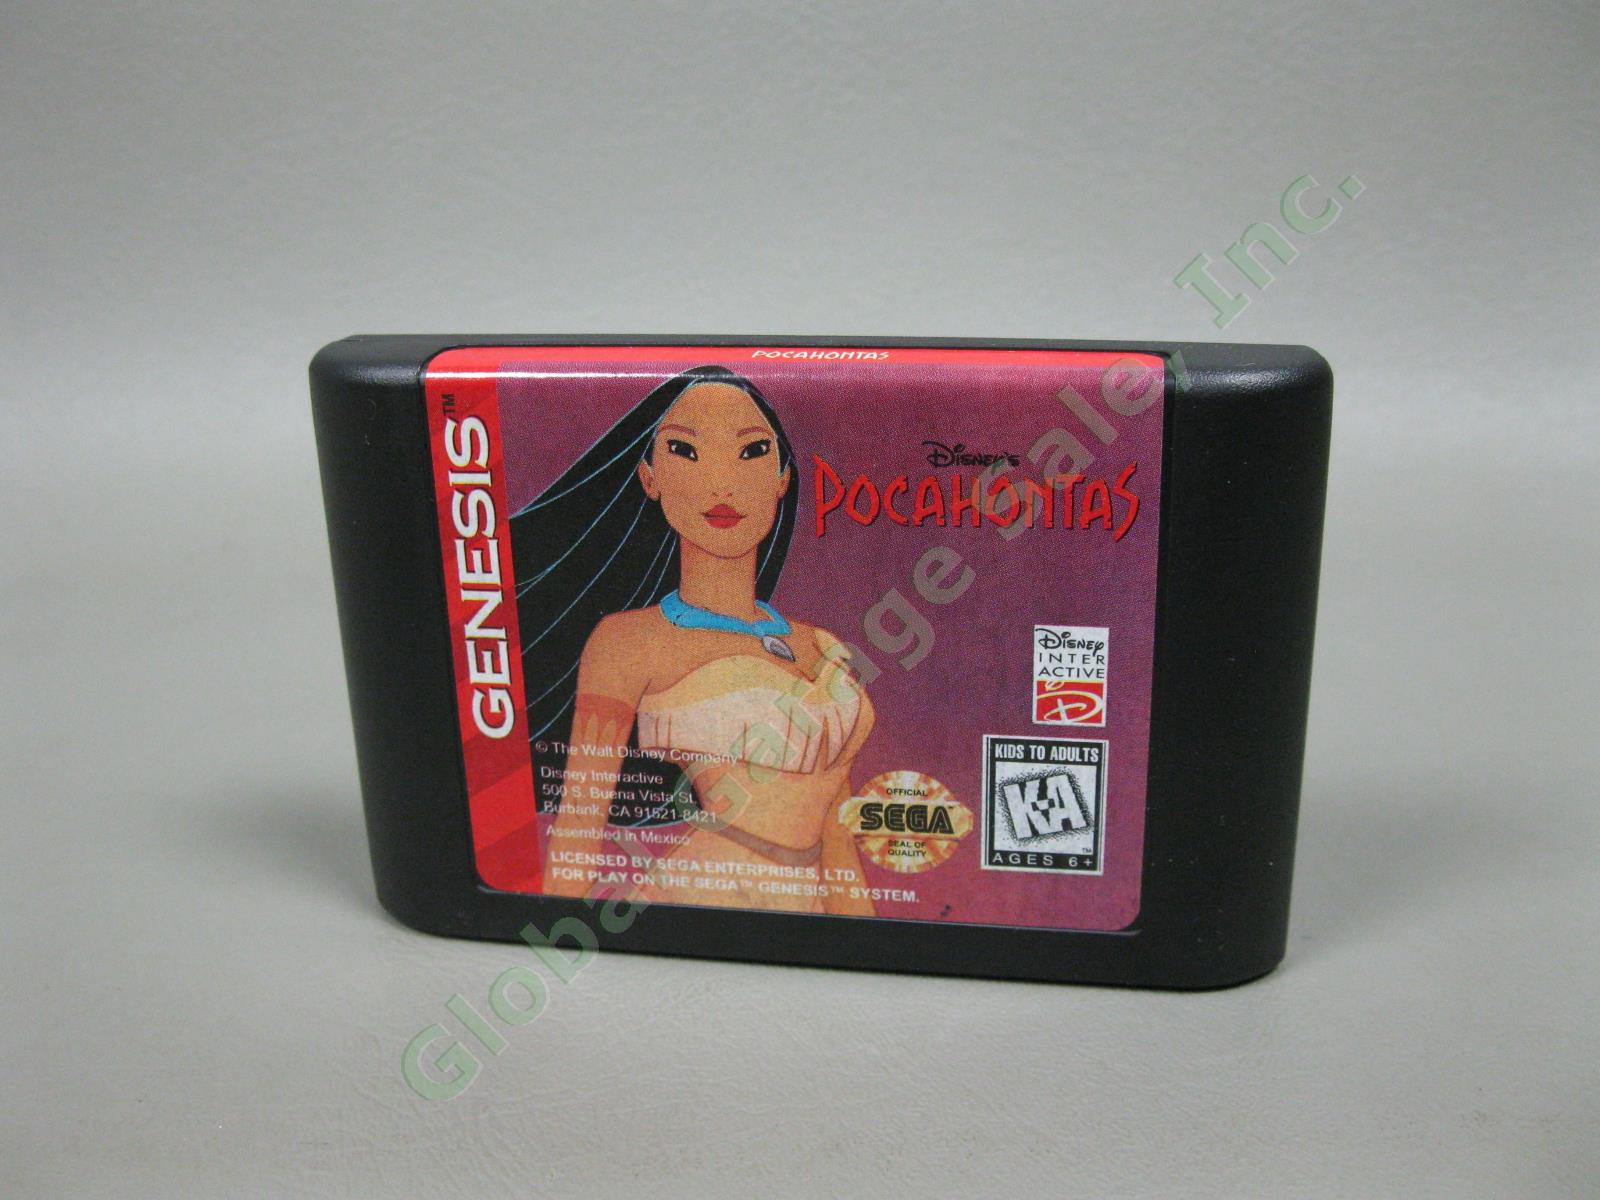 Sega Genesis Pocahontas Video Game Complete In Case w/ Cartridge Insert & Poster 8